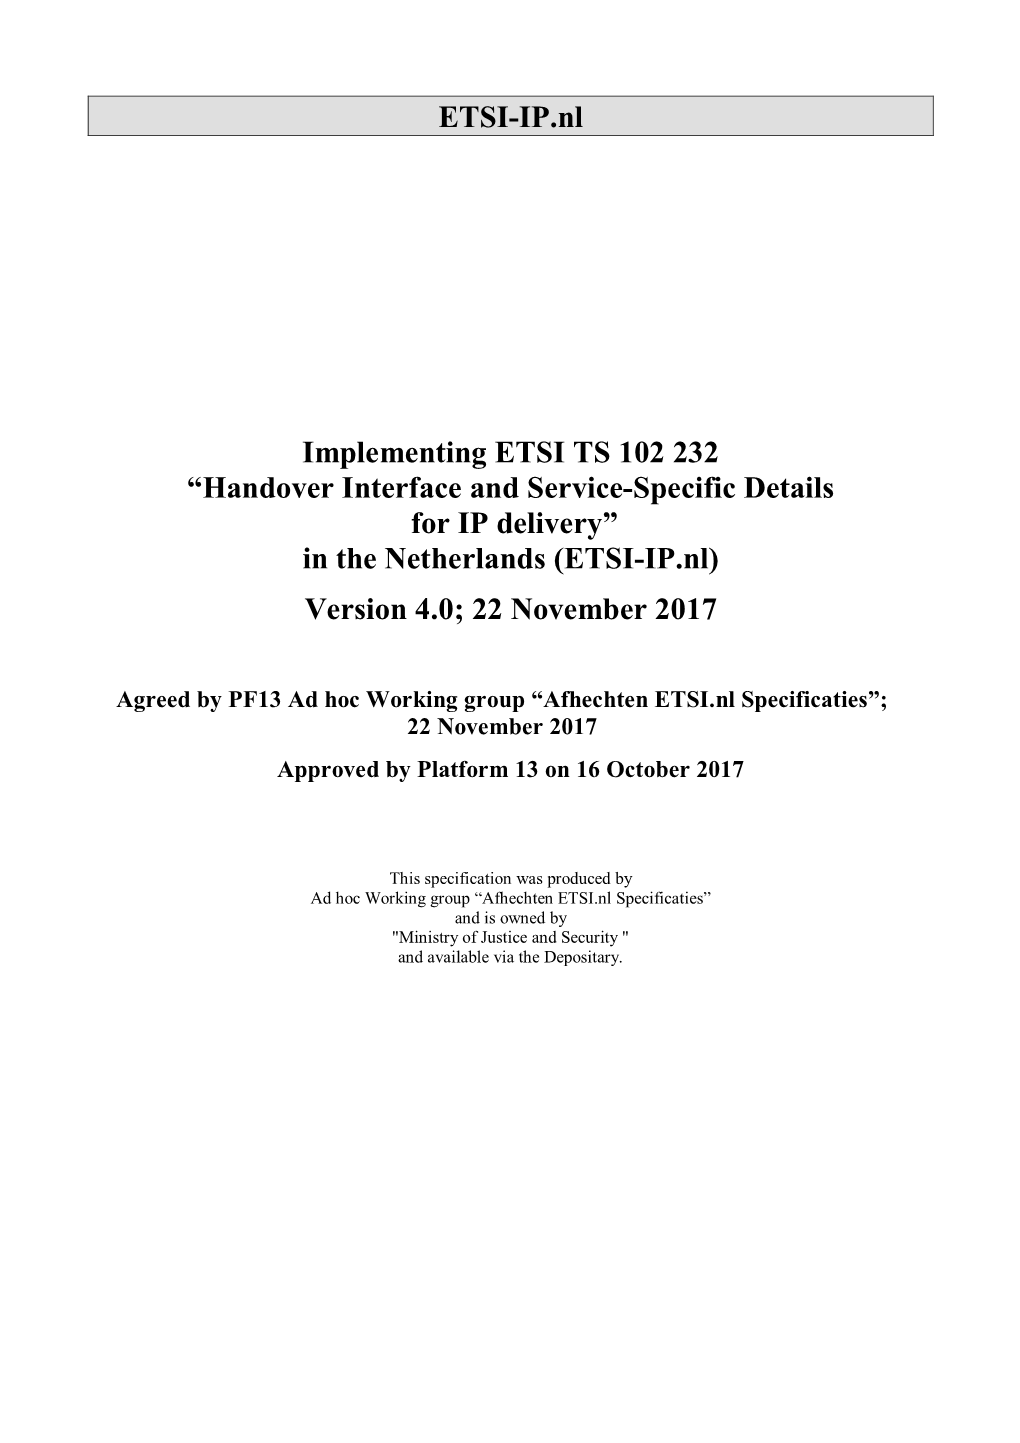 ETSI-IP.Nl Implementing ETSI TS 102